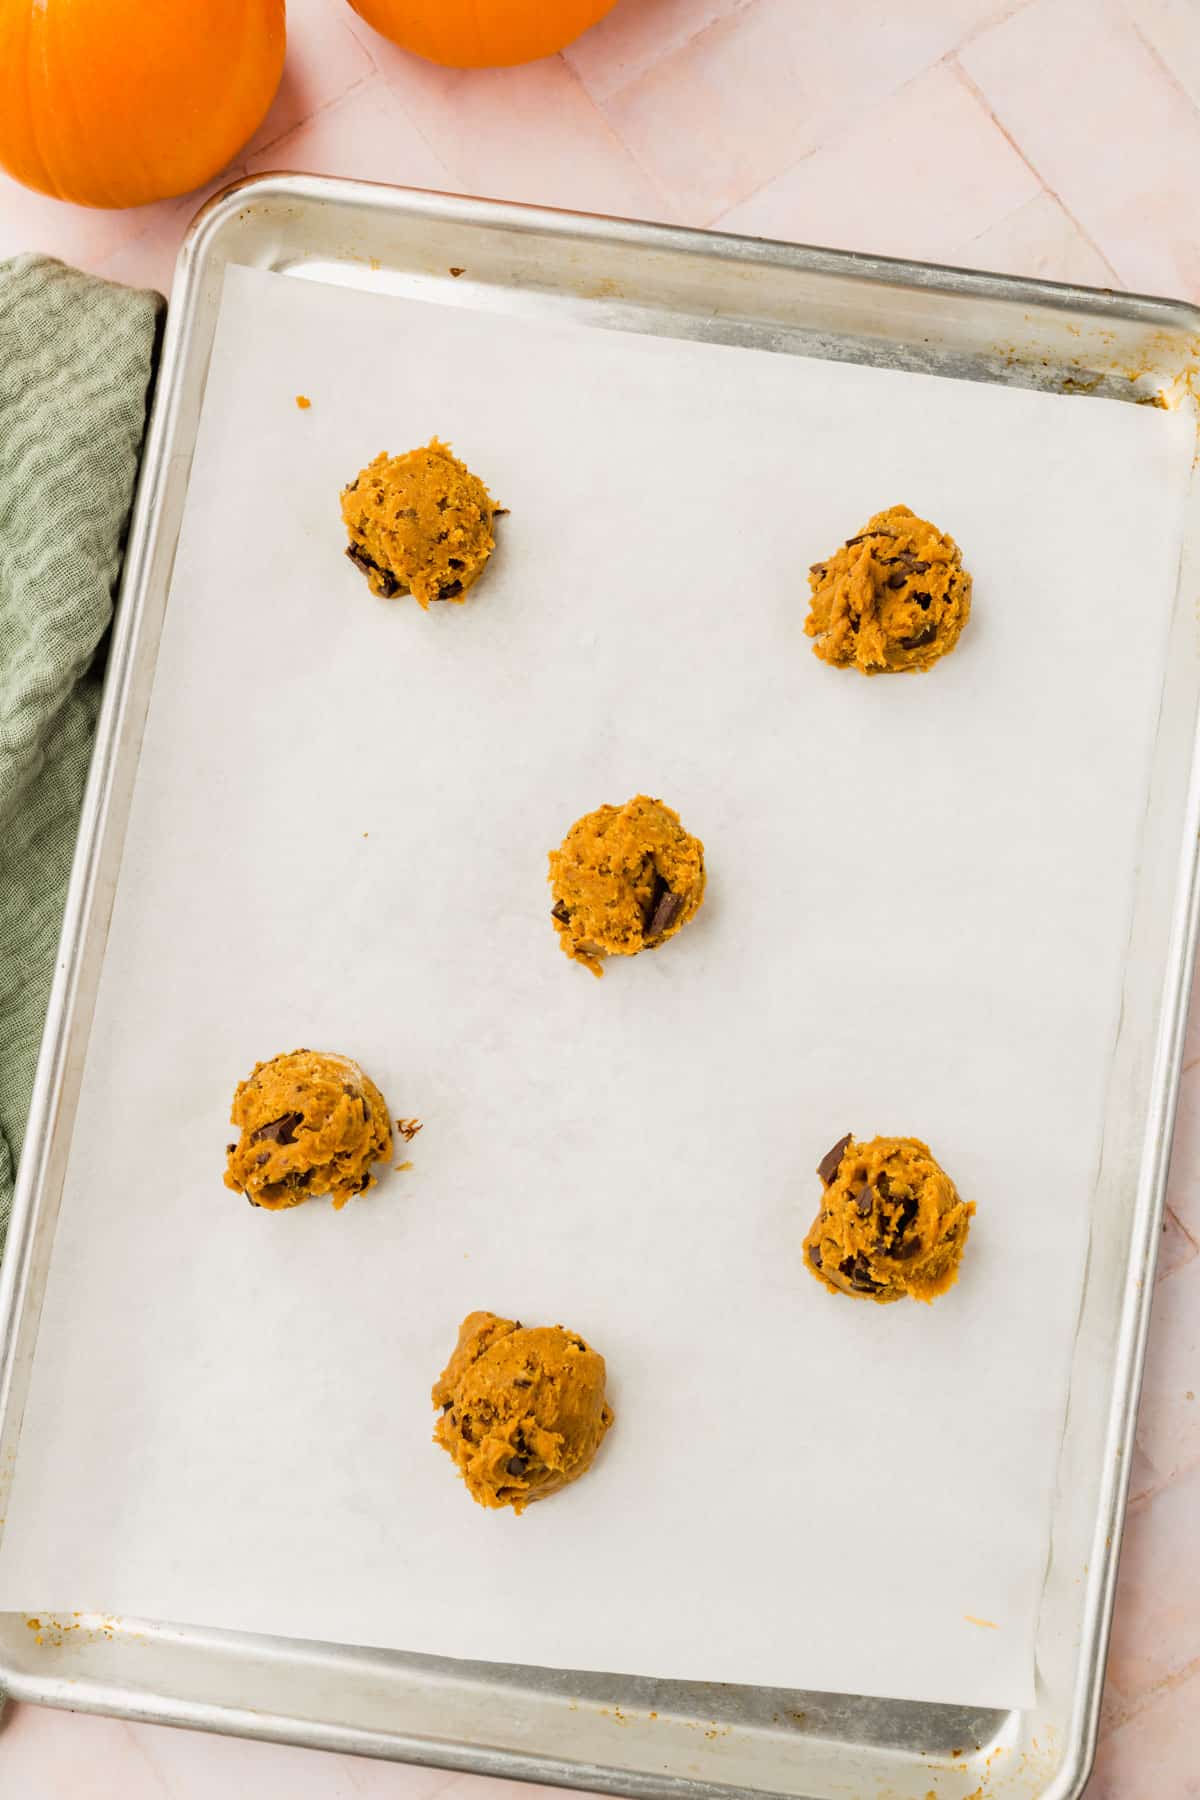 Six balls of gluten-free pumpkin chocolate chip cookie dough on a parchment lined baking sheet.